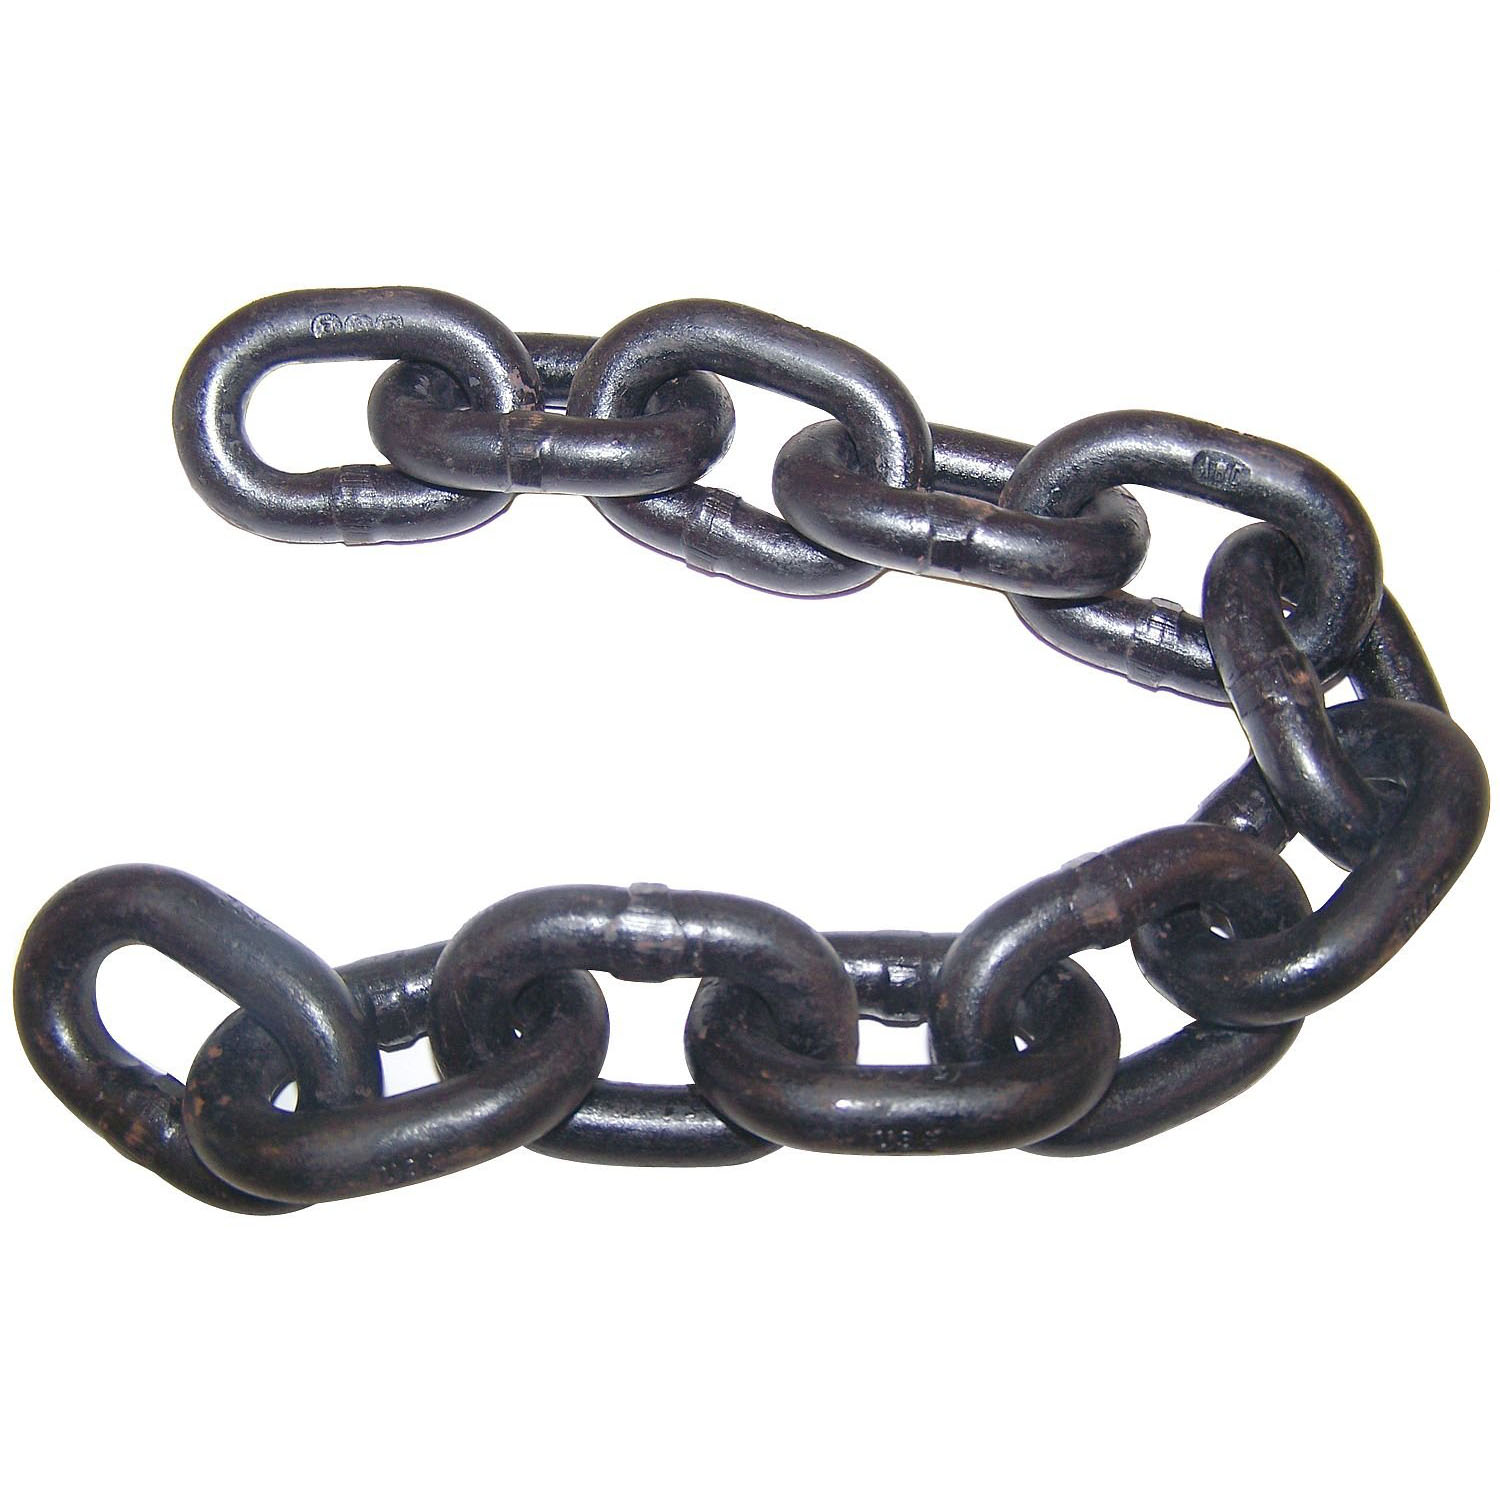 Chain & Chain Accessories